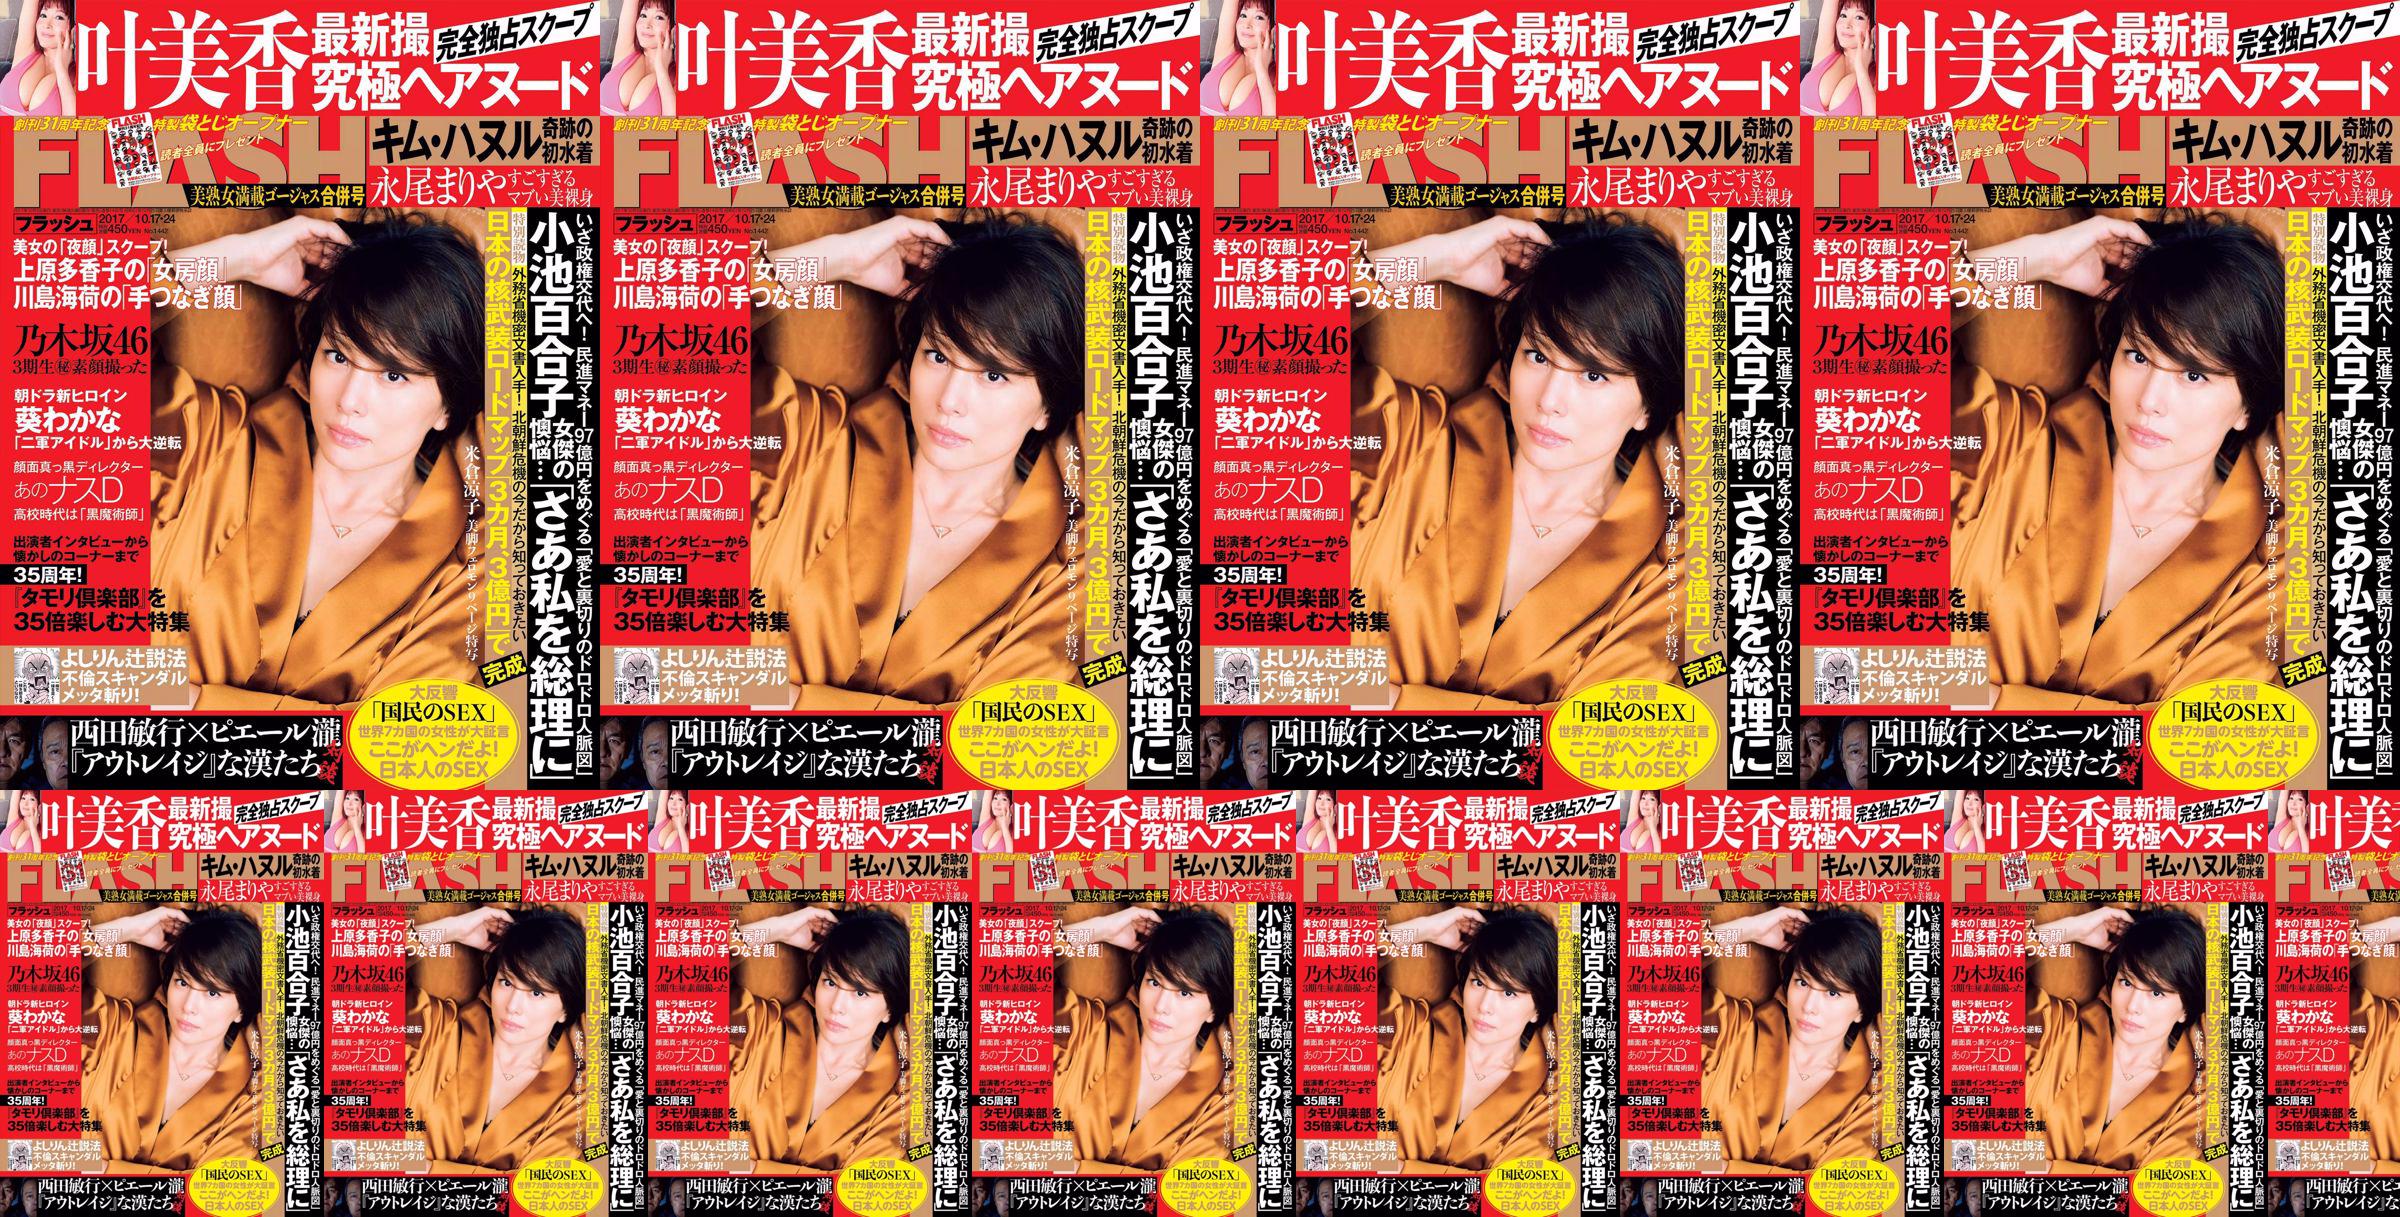 [FLASH] Yonekura Ryoko Ye Meixiang Tachibana Flower Rin Nagao Rika 2017.10.17-24 นิตยสารภาพถ่าย No.95943b หน้า 1